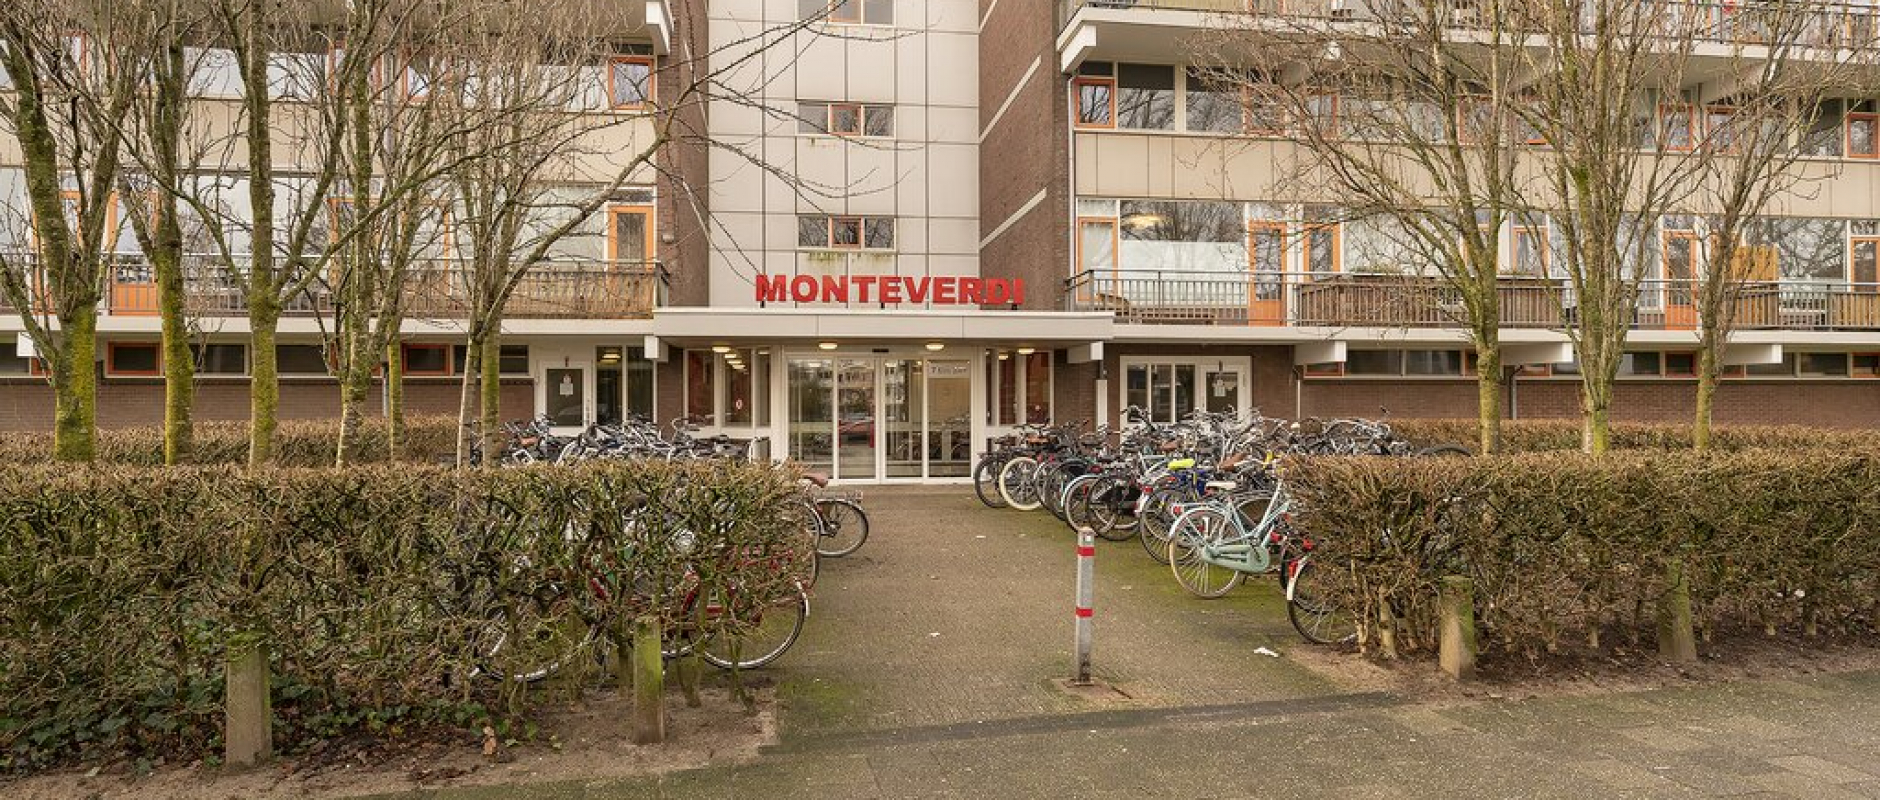 Woning te koop aan de Monteverdilaan 135 te Zwolle